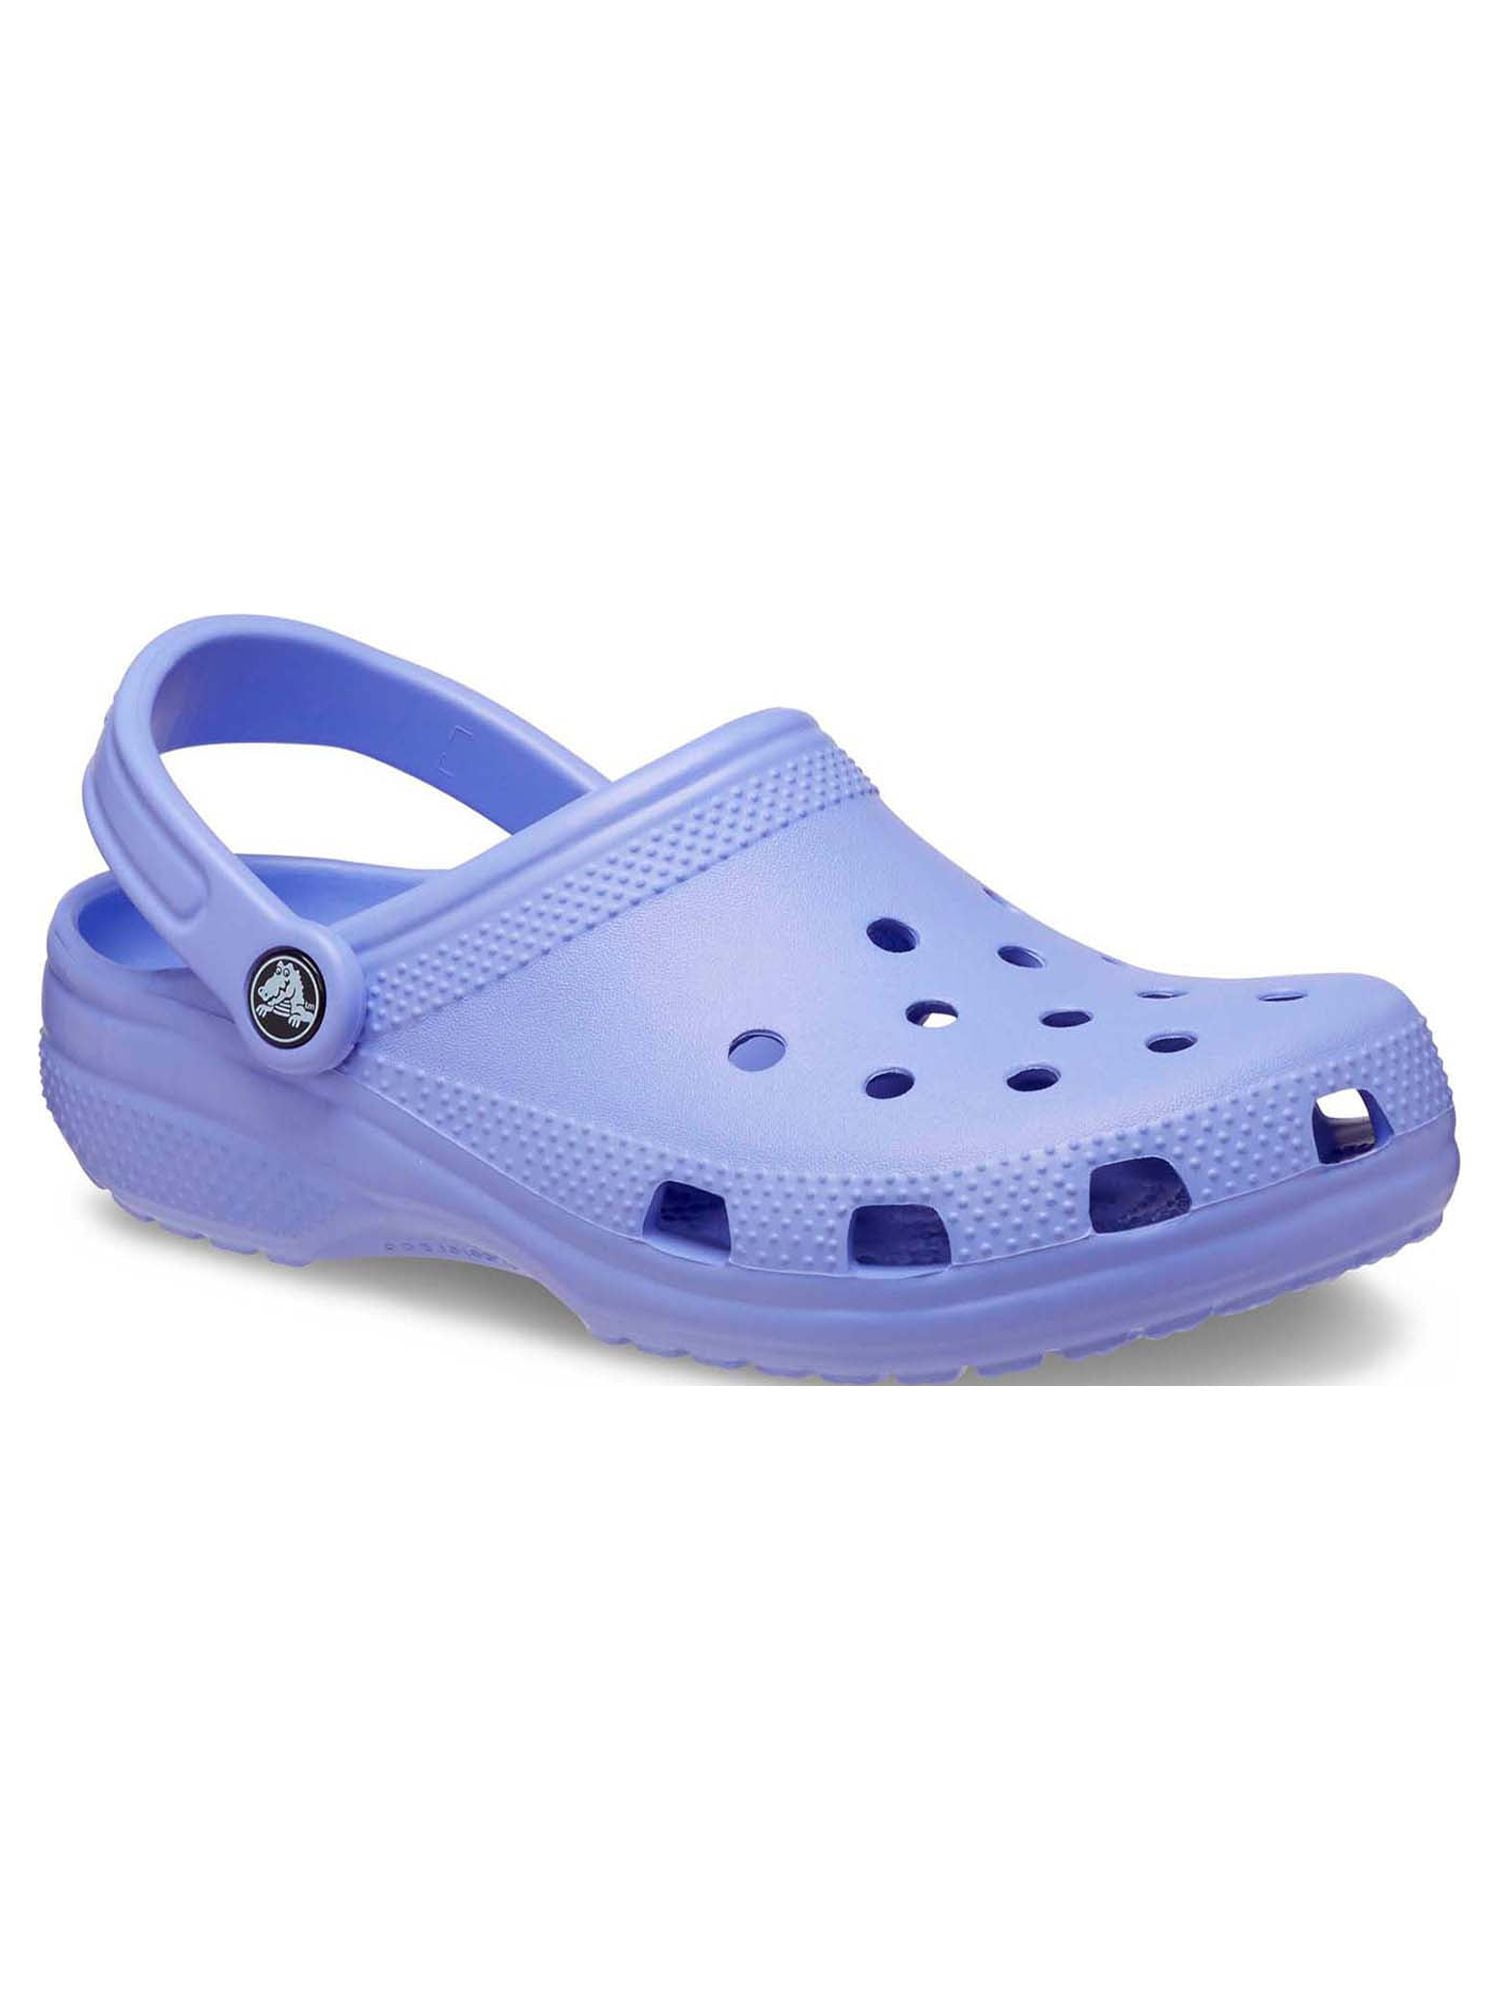 Custom crocs  Crocs fashion, Designer crocs, Crocs shoes